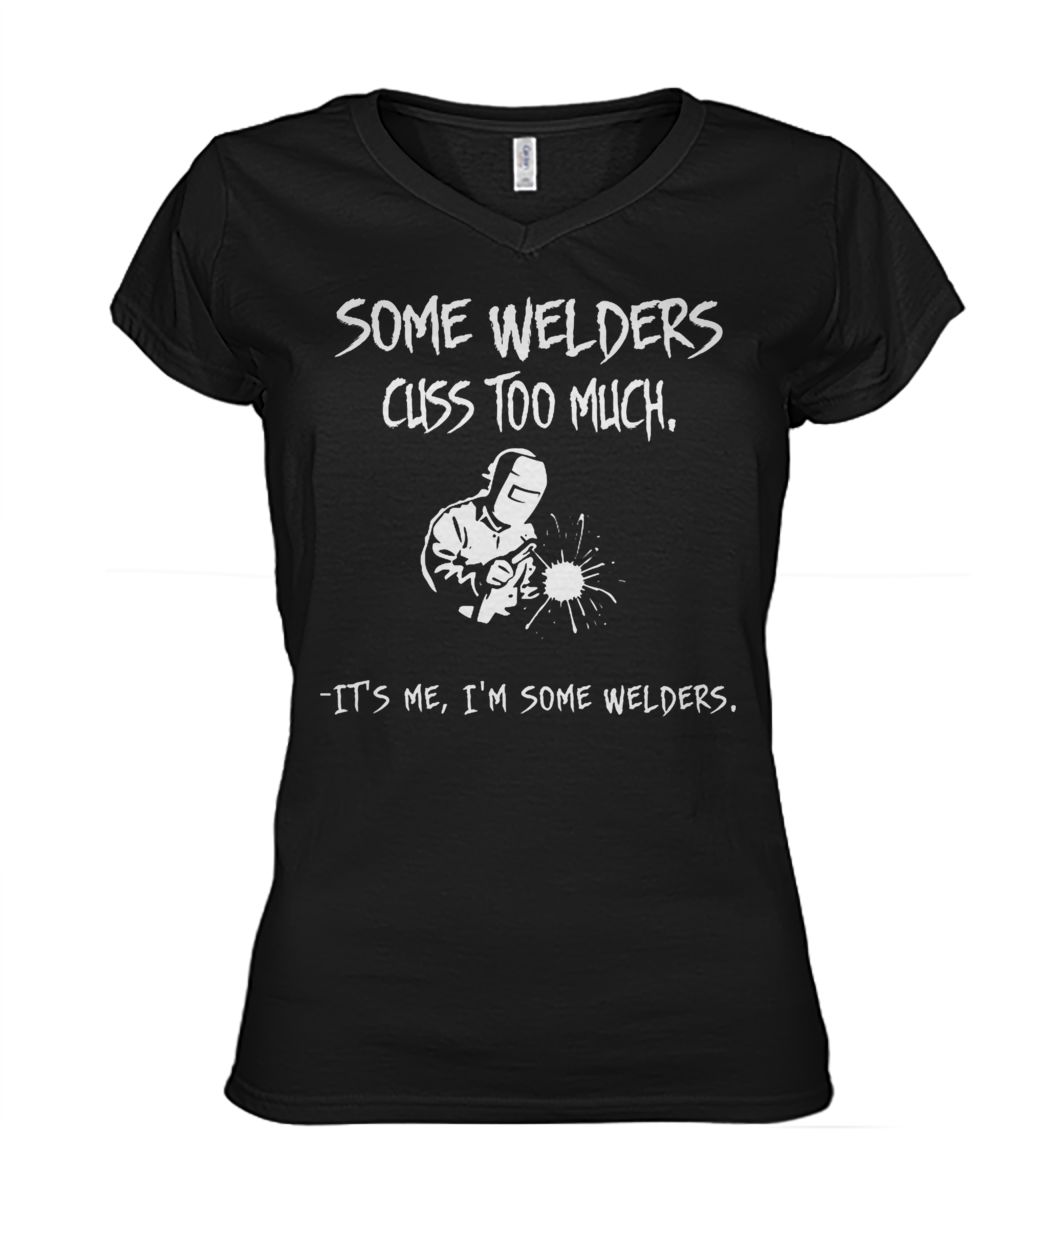 Some welders cuss too much it's me I'm some welders women's v-neck